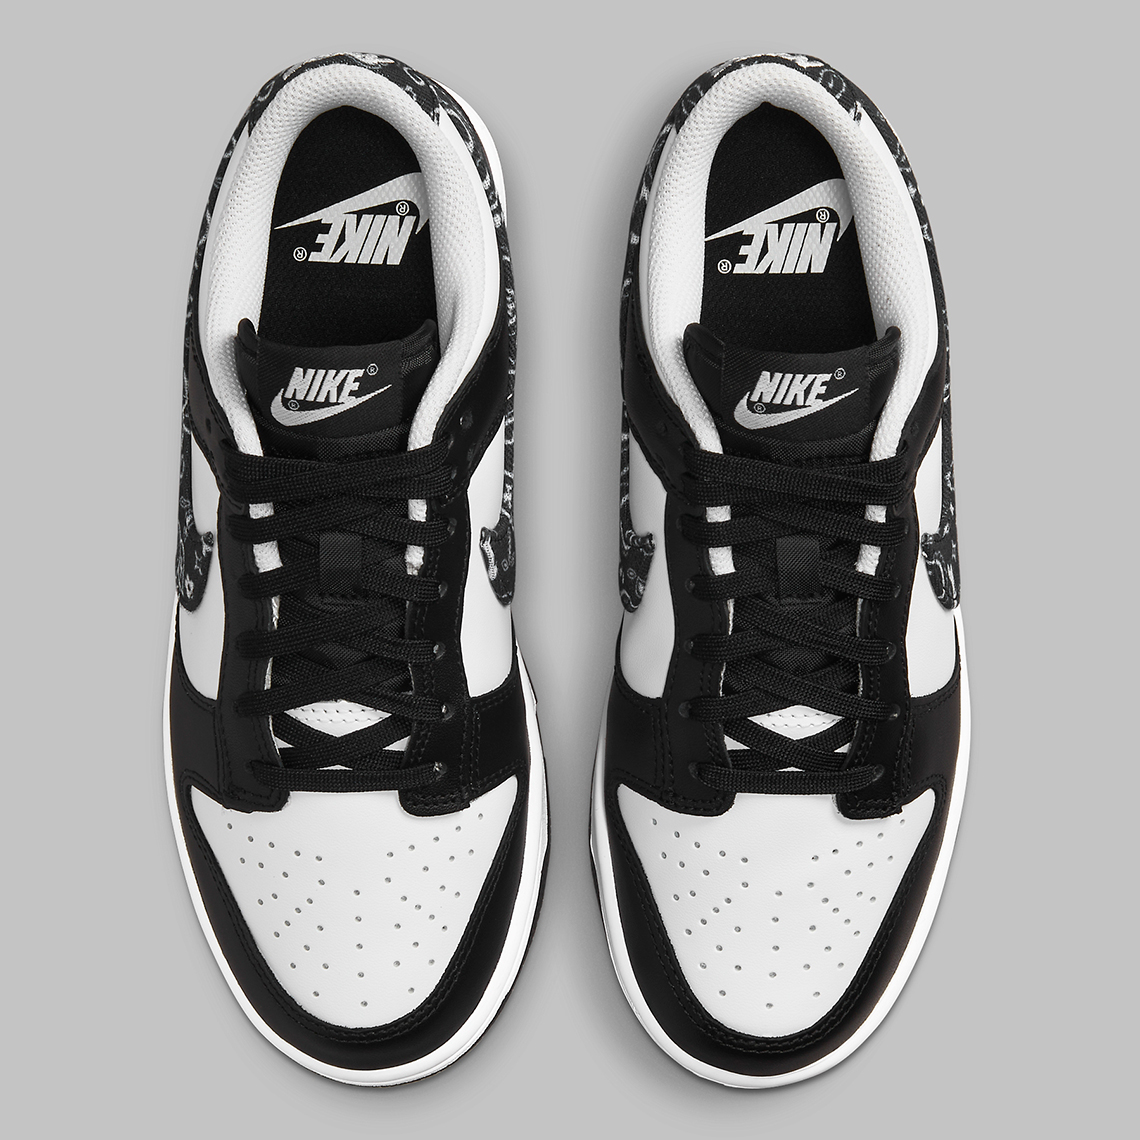 hurricane shoes nike white sneakers sandals sale Black White Paisley Panda Dh4401 100 3